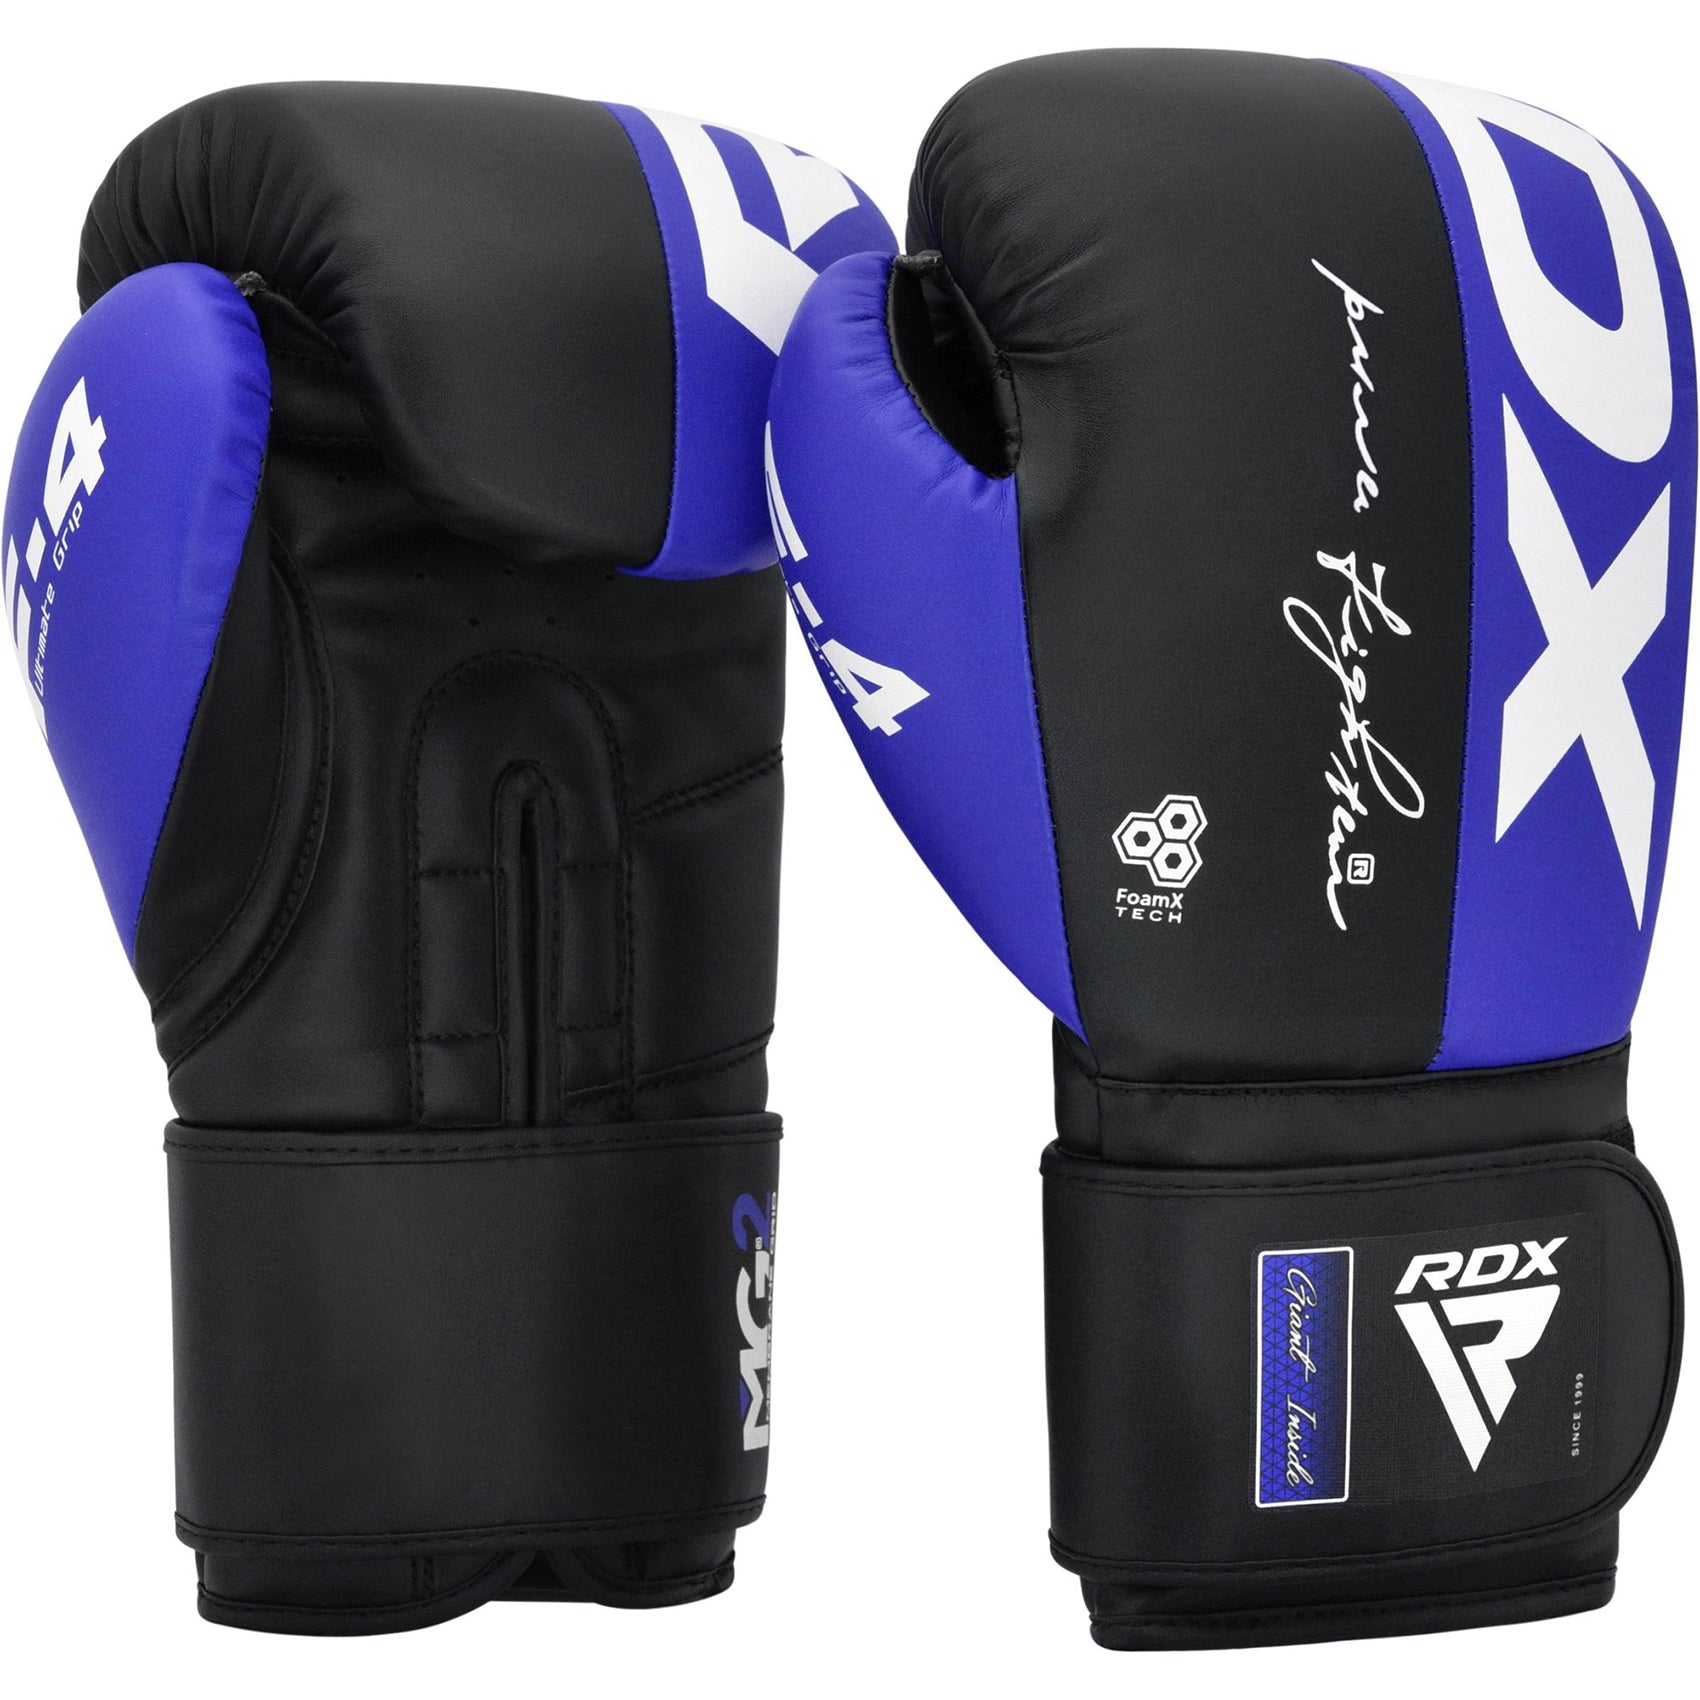 RDX REX F4 MMA, BJJ, Muay Thai, Kickboxing, Training Boxing Gloves - BLUE/BLACK - 16oz - Pro-Distributing